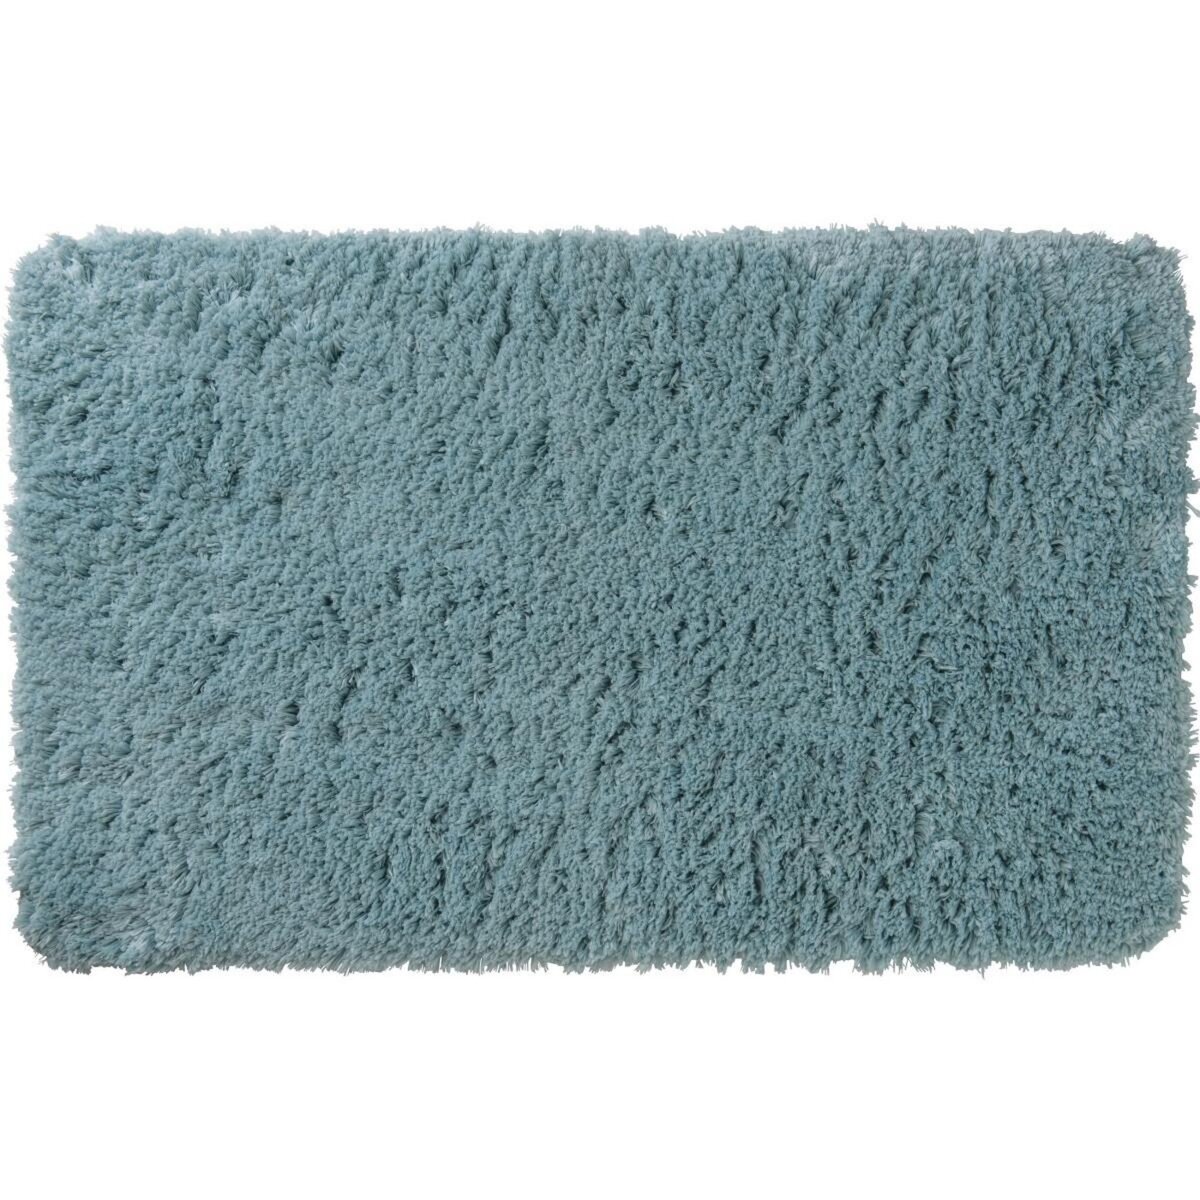 GUY LEVASSEUR Tapis de bain en polyester uni bleu 50x80cm